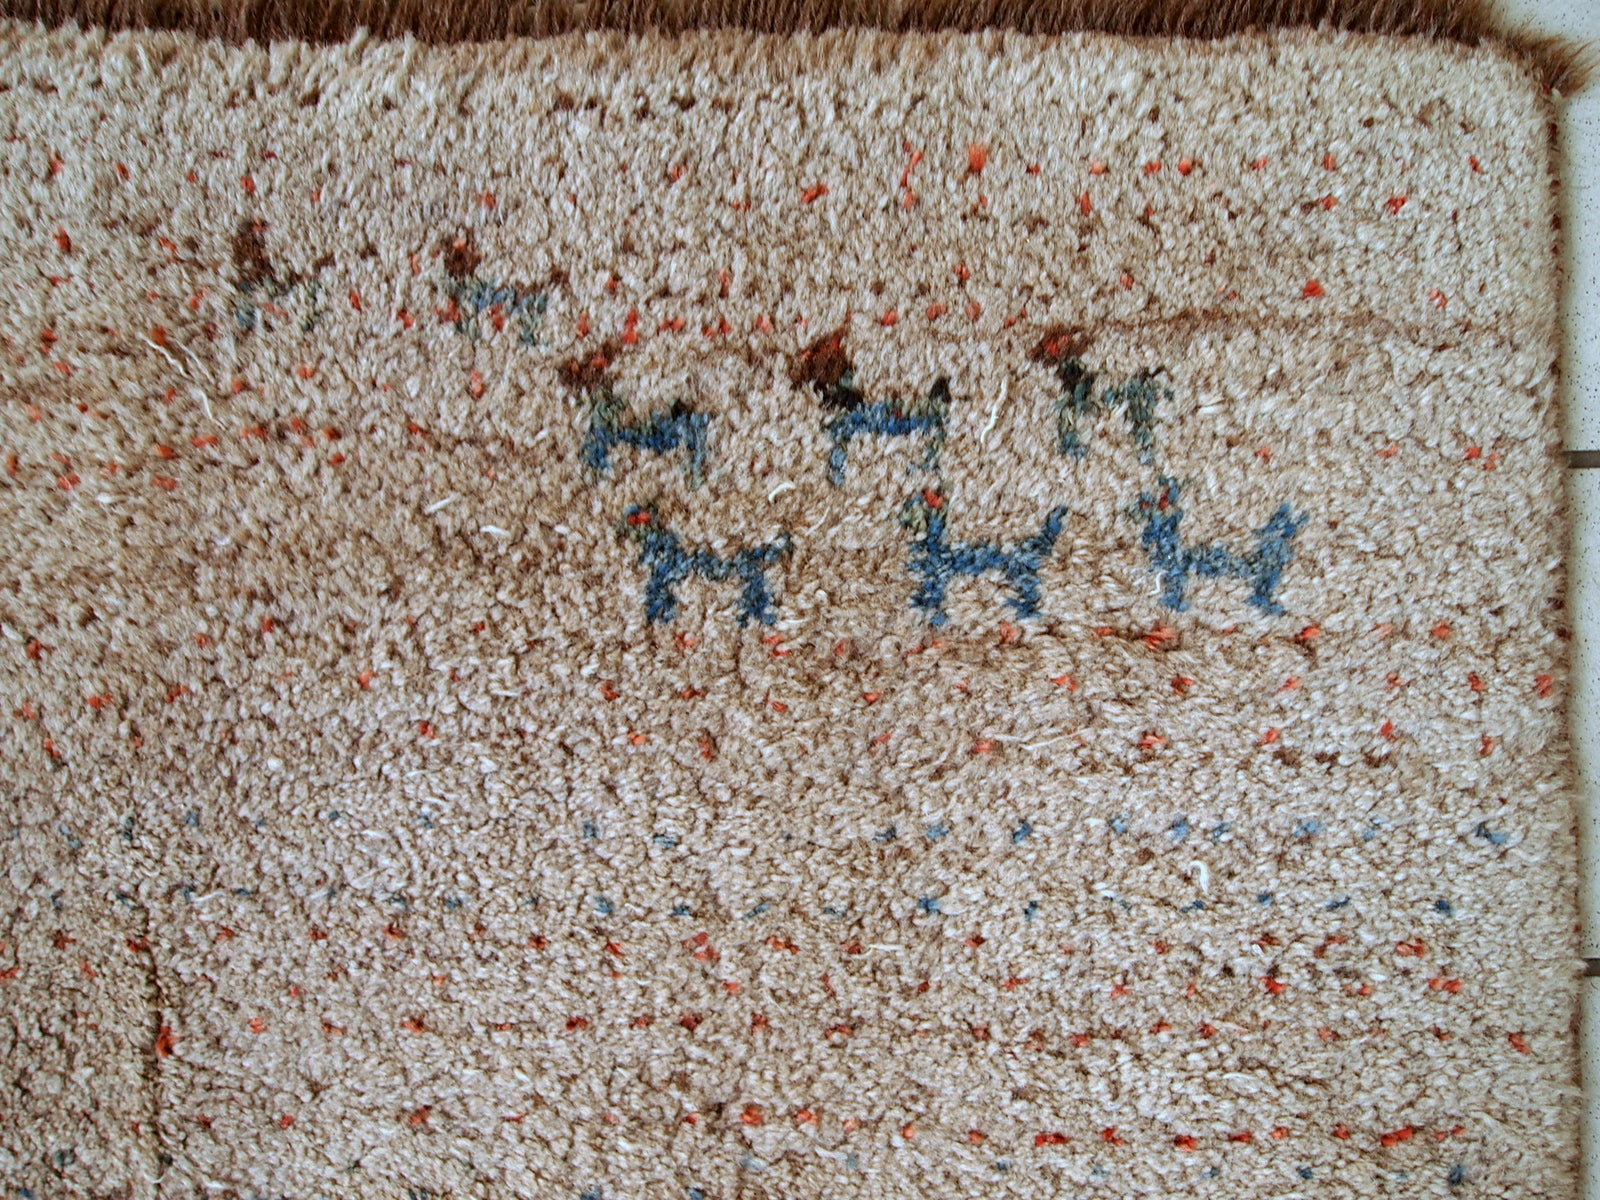 Close-up of Original Gabbeh Rug - Vintage Oriental Floor Rug - Soft and Fluffy Texture - Handmade Wool Carpet - 3.7' x 6' Size